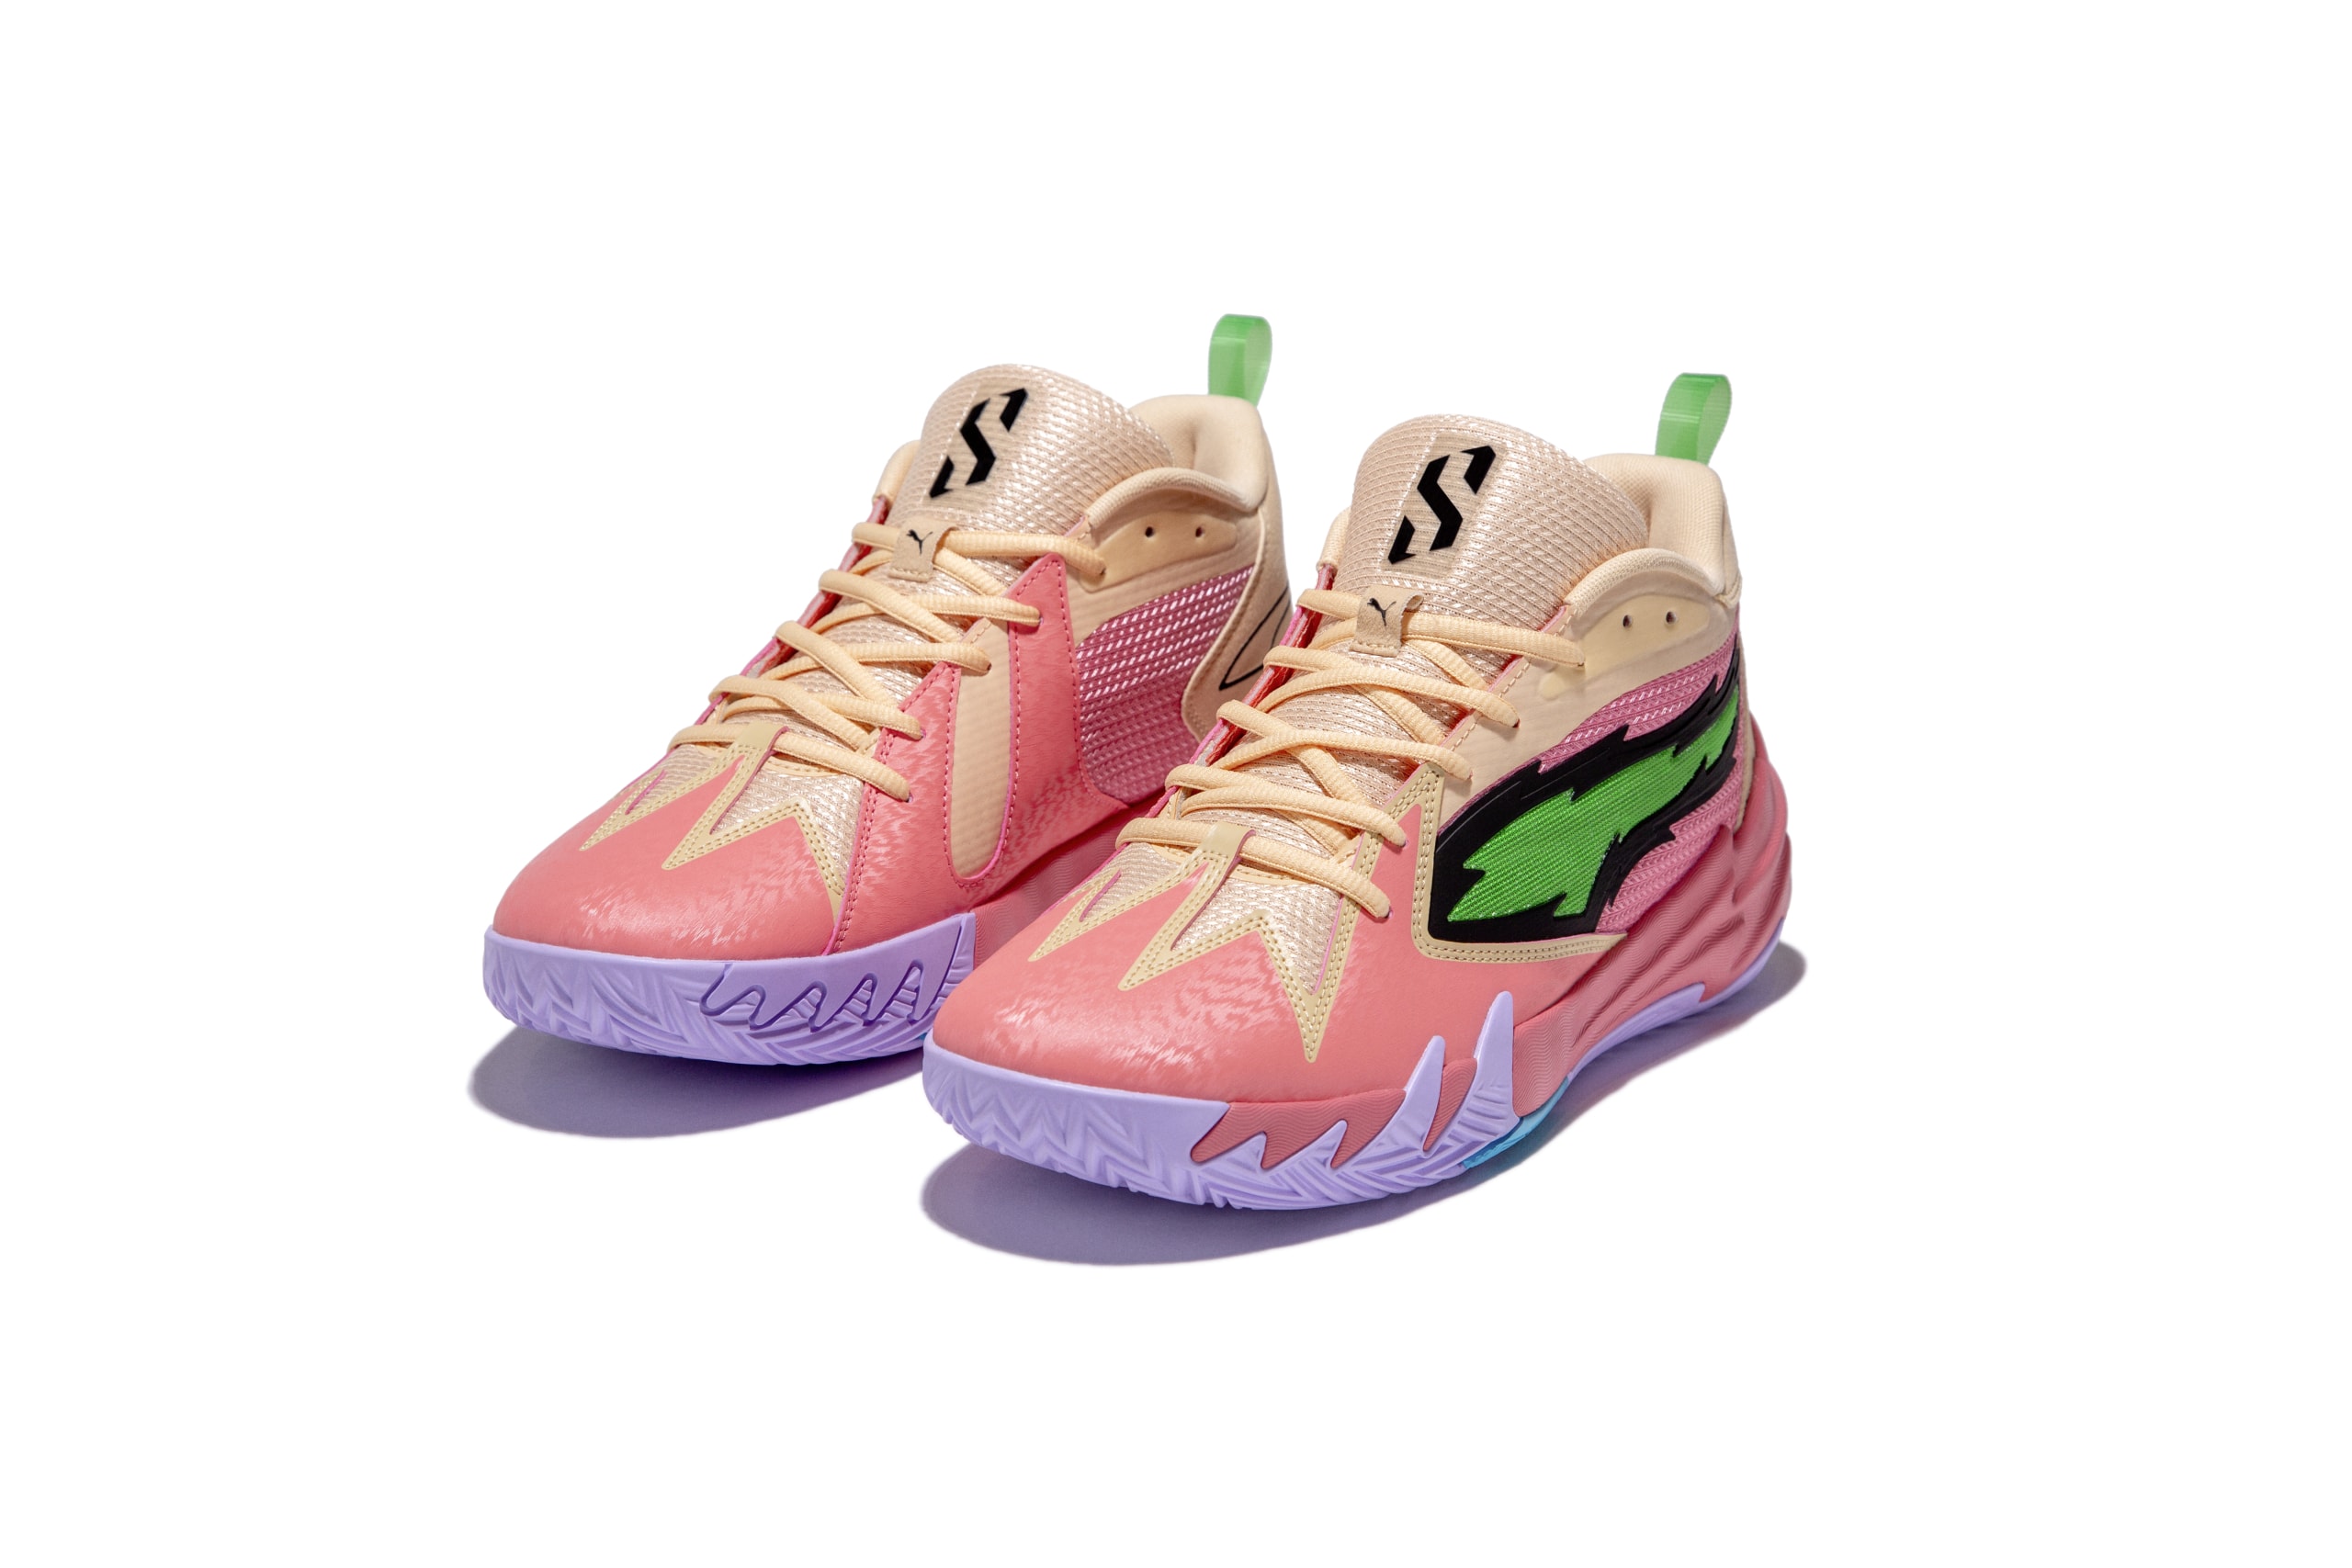 Scoot Henderson 首雙簽名籃球鞋 PUMA Scoot Zeros 台灣發售情報正式公開